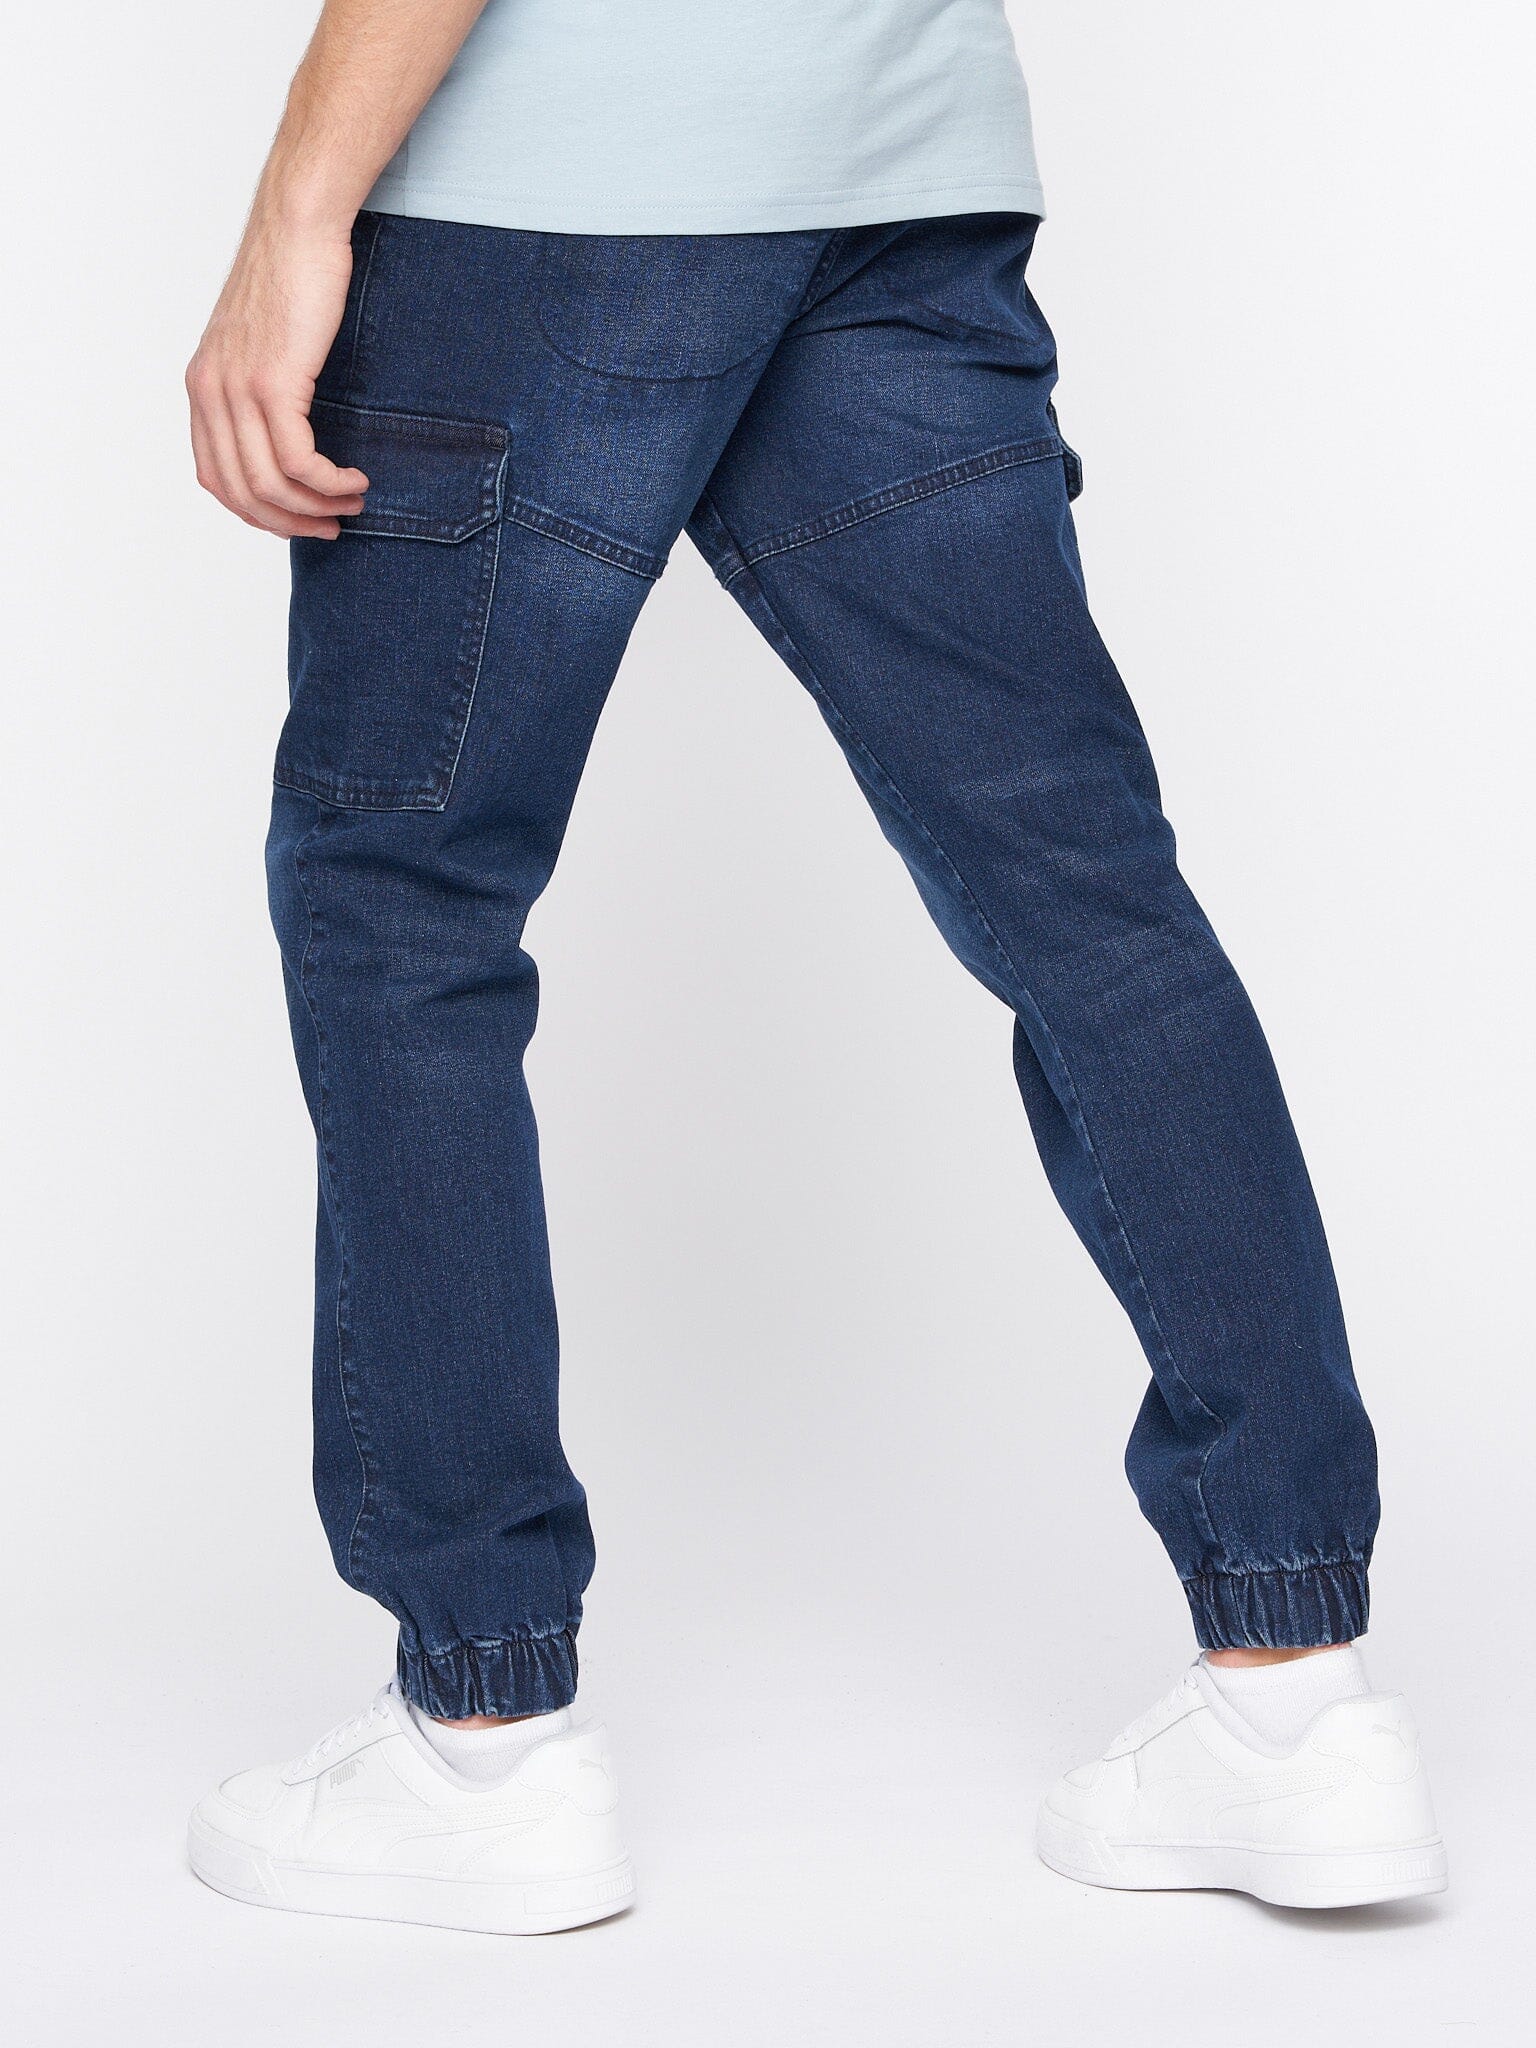 Malimore Cargo Cuff Jeans Dark Wash